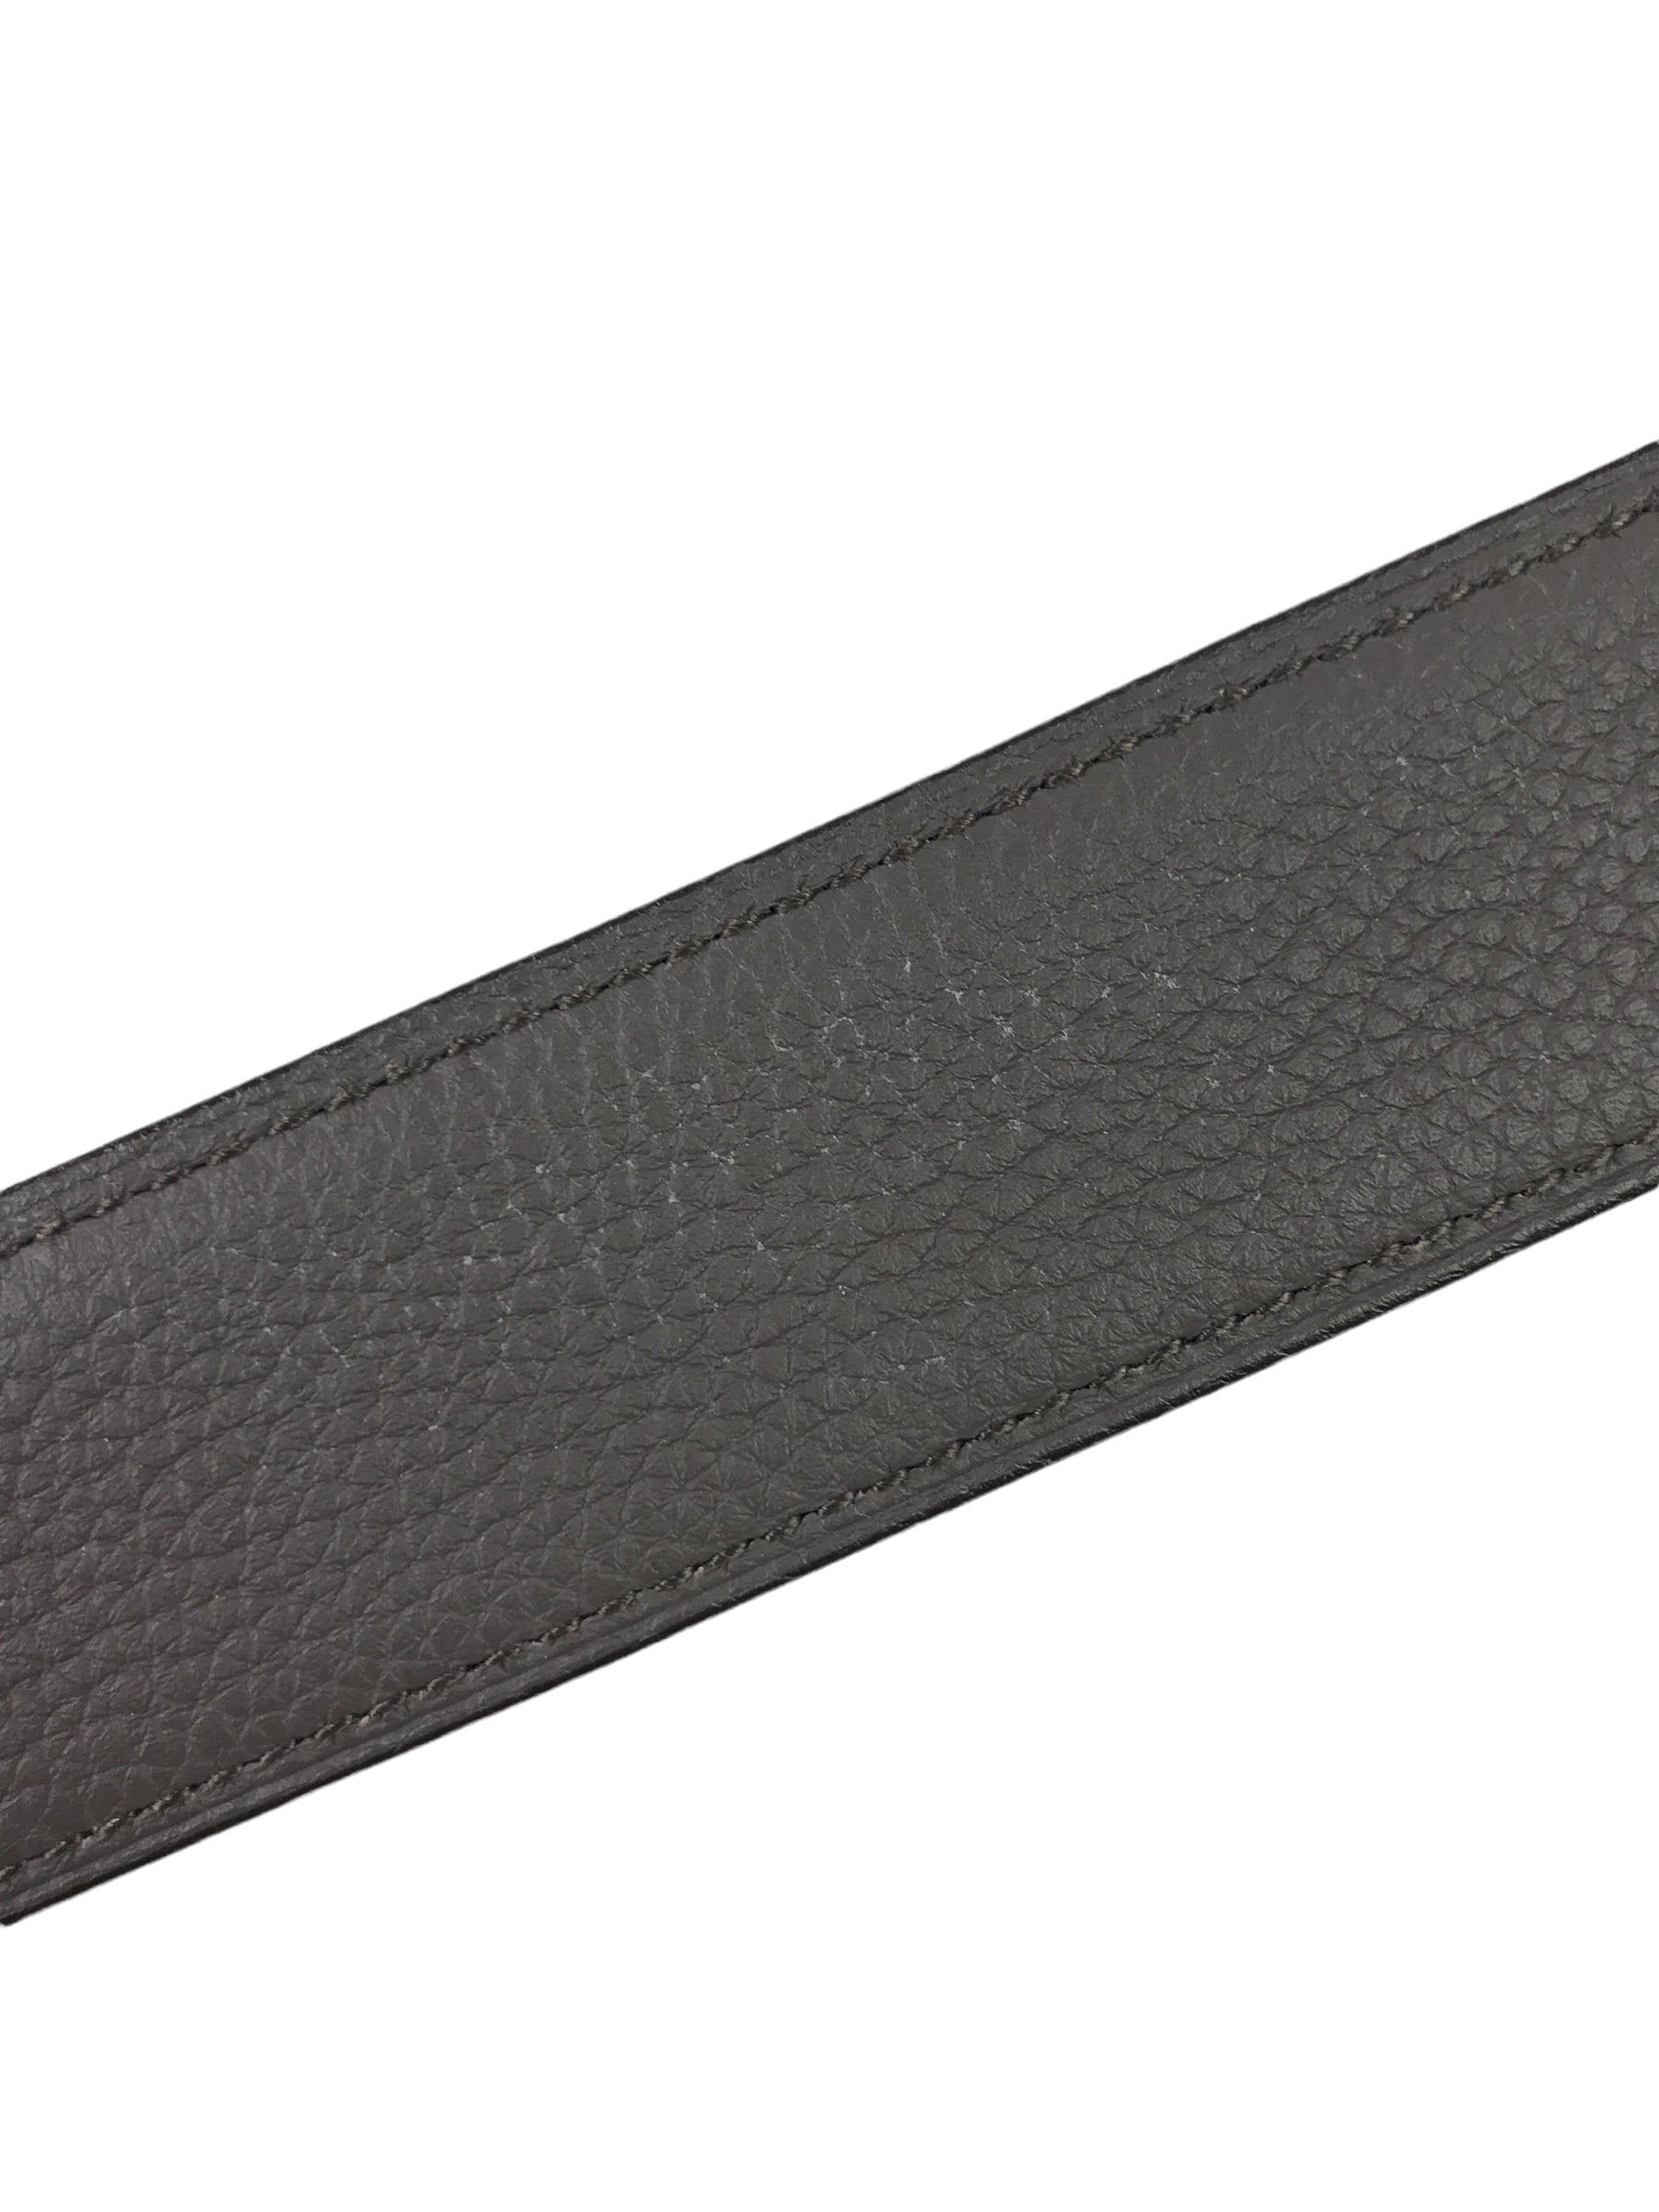 Black Box Calf/Etain Togo Leather H Belt W/PHW